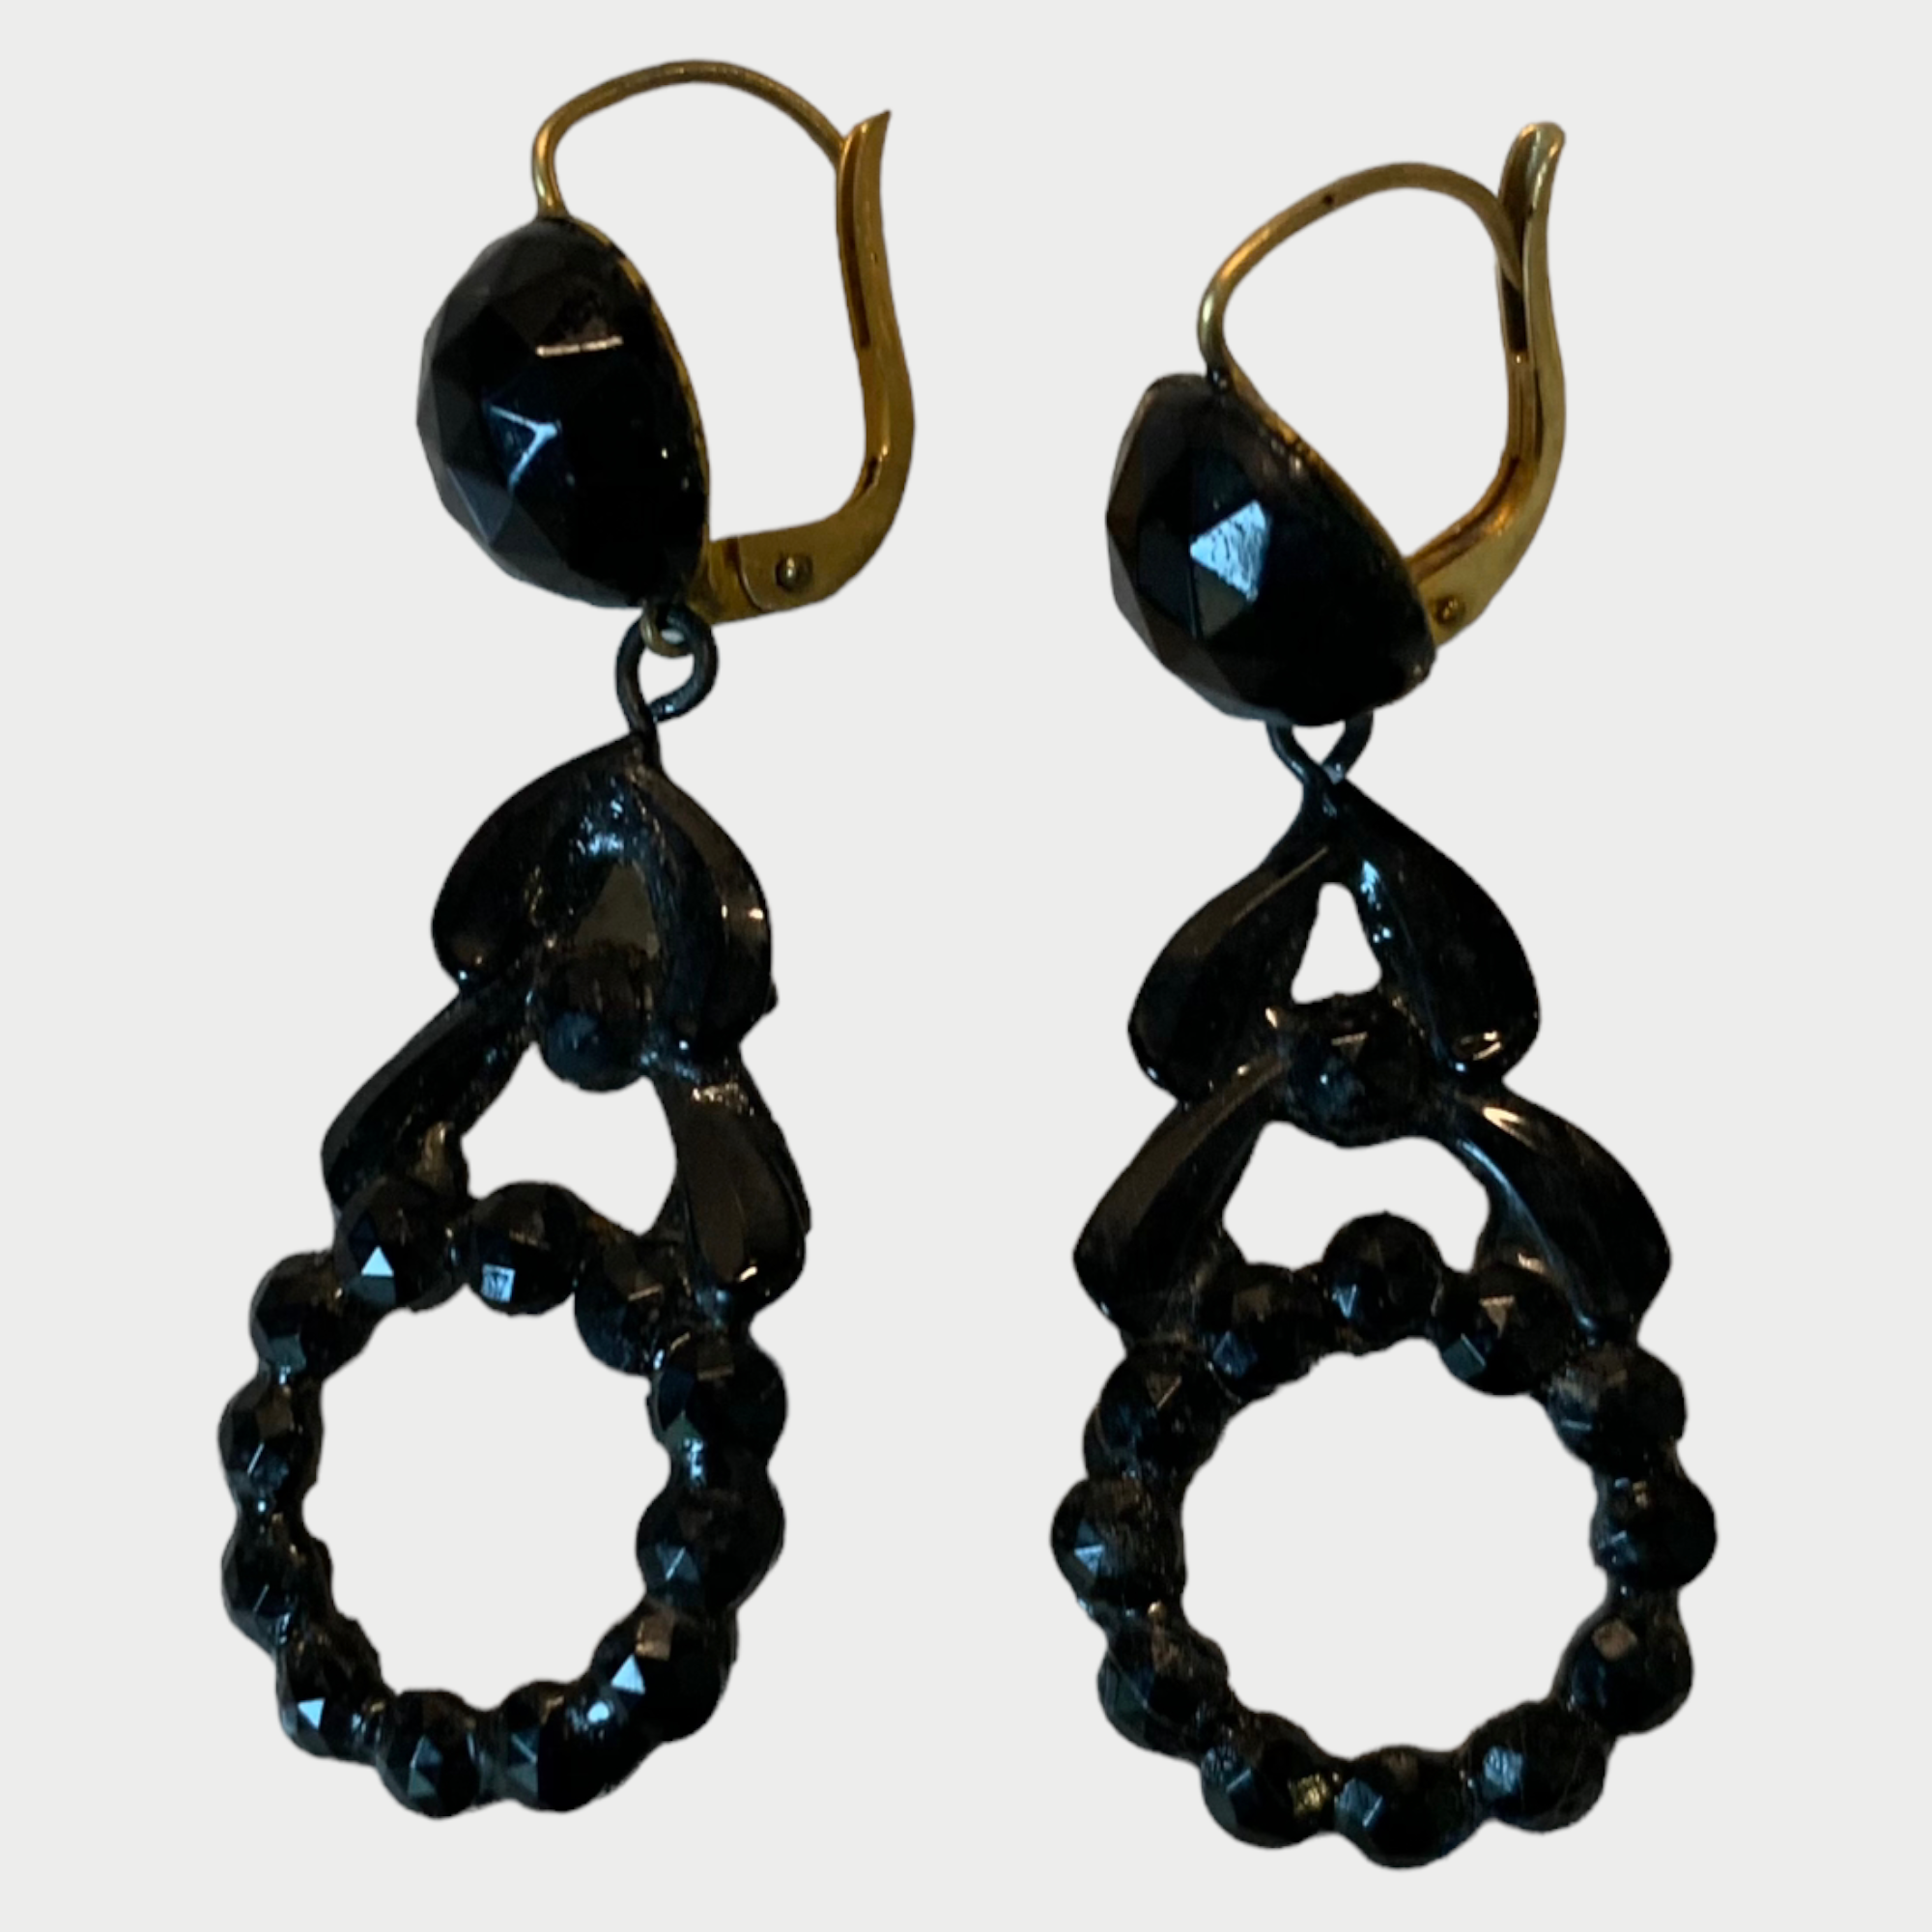 Original Art Deco Black Crystal Earrings